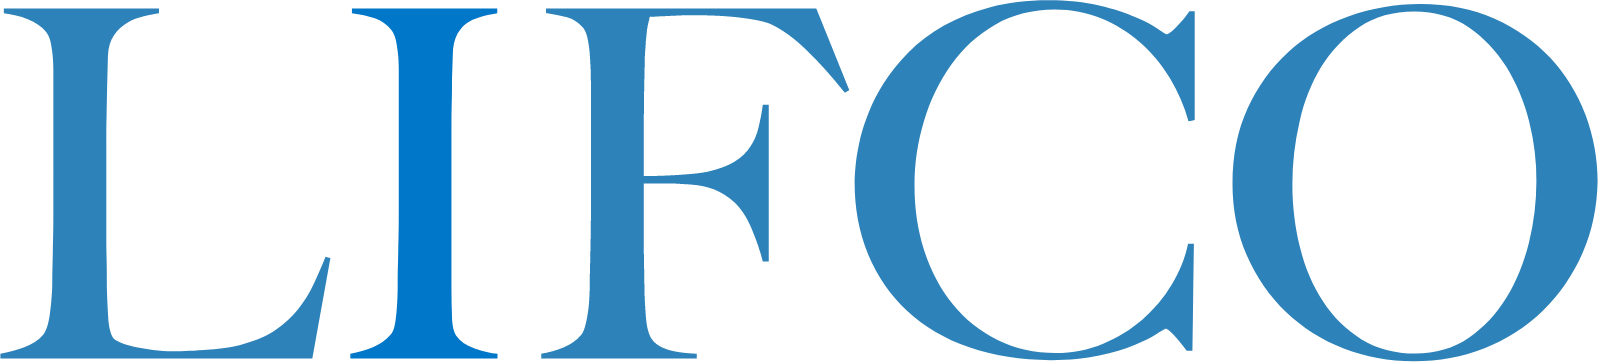 Lifco
 logo large (transparent PNG)